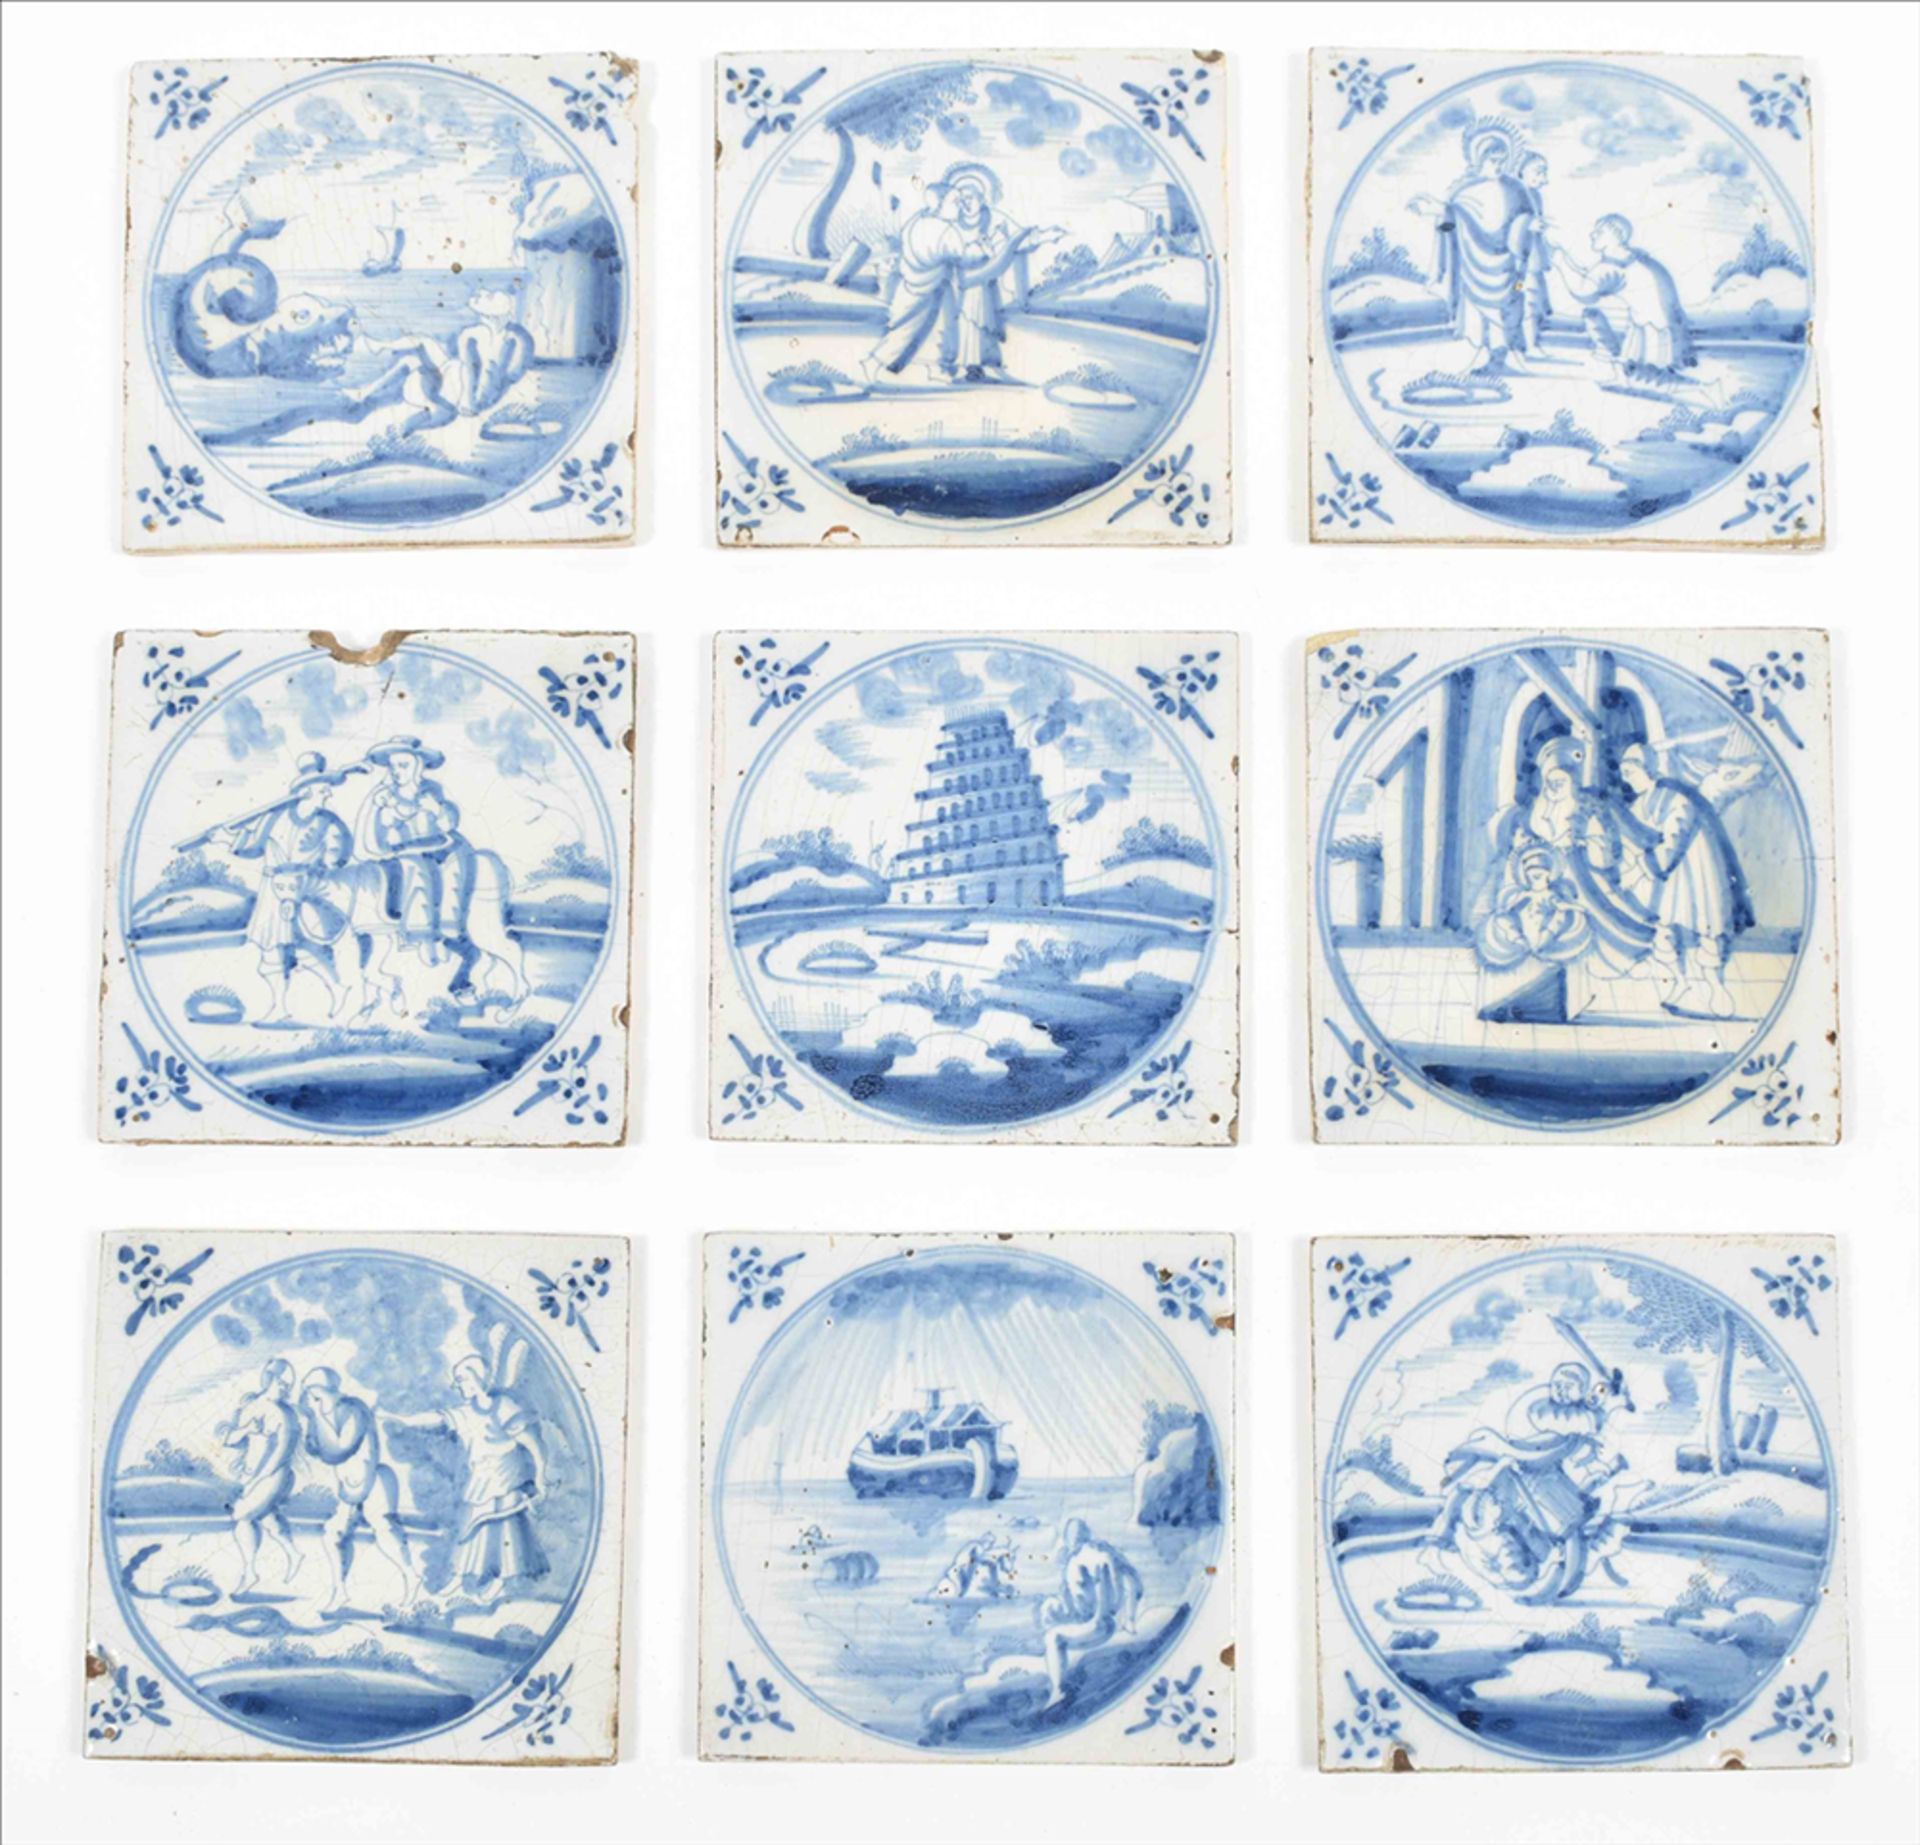 Nine Dutch tiles with biblical scenes